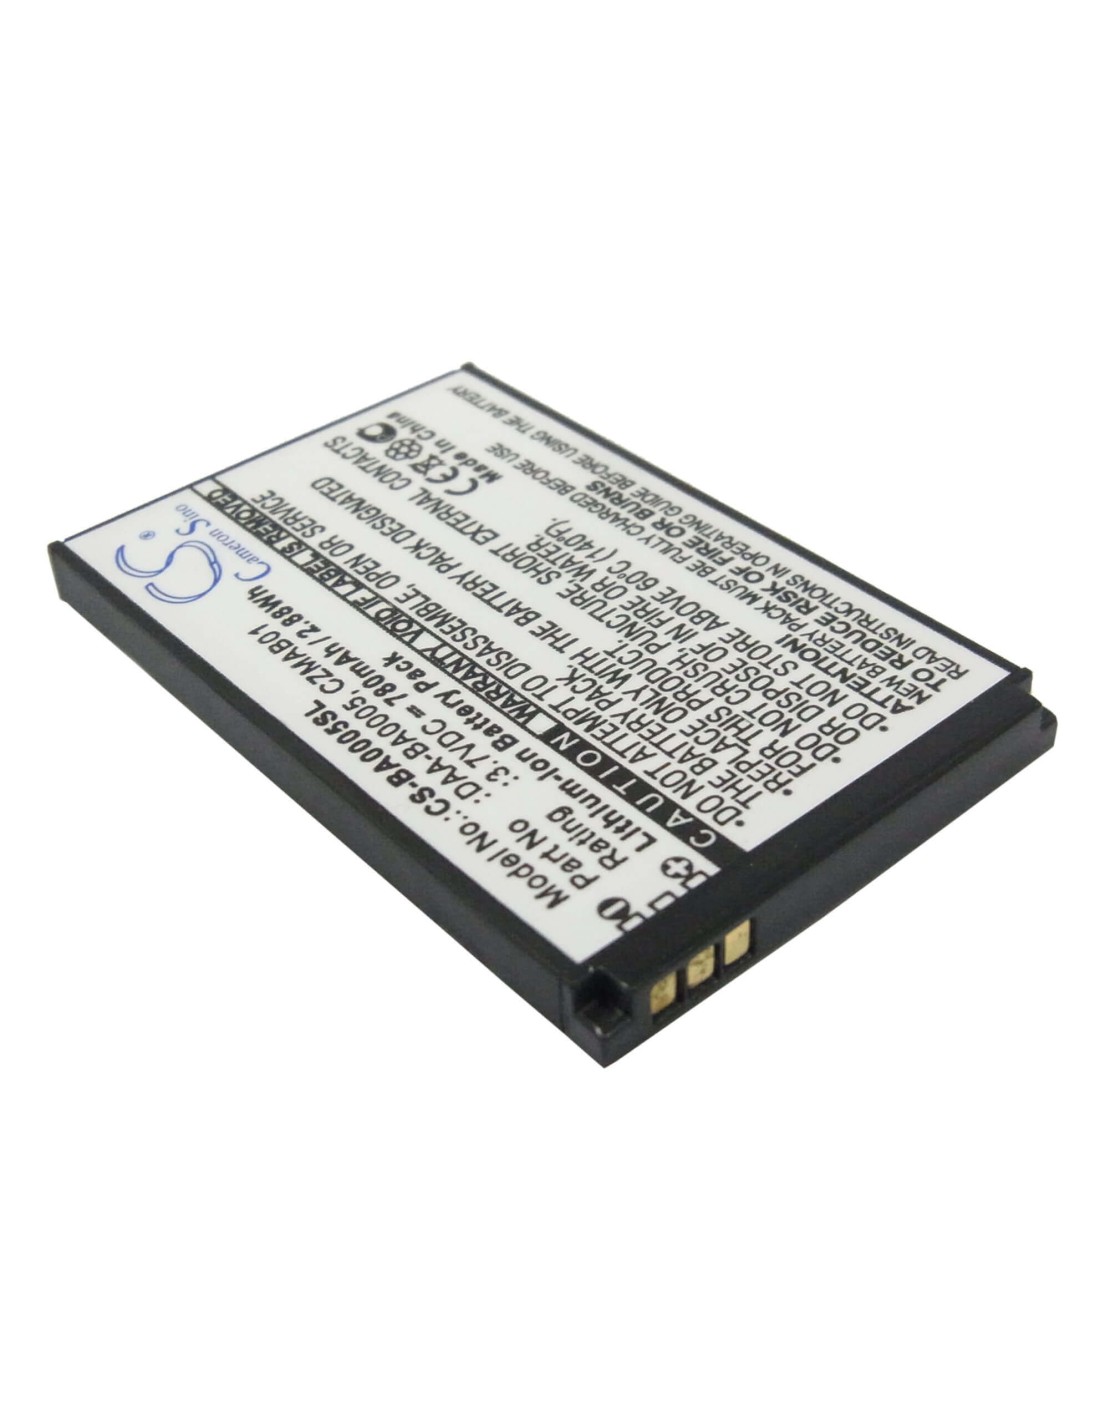 Battery for Creative Zen Micro, Zen Micro Photo, Zen Micro 5gb 3.7V, 780mAh - 2.89Wh